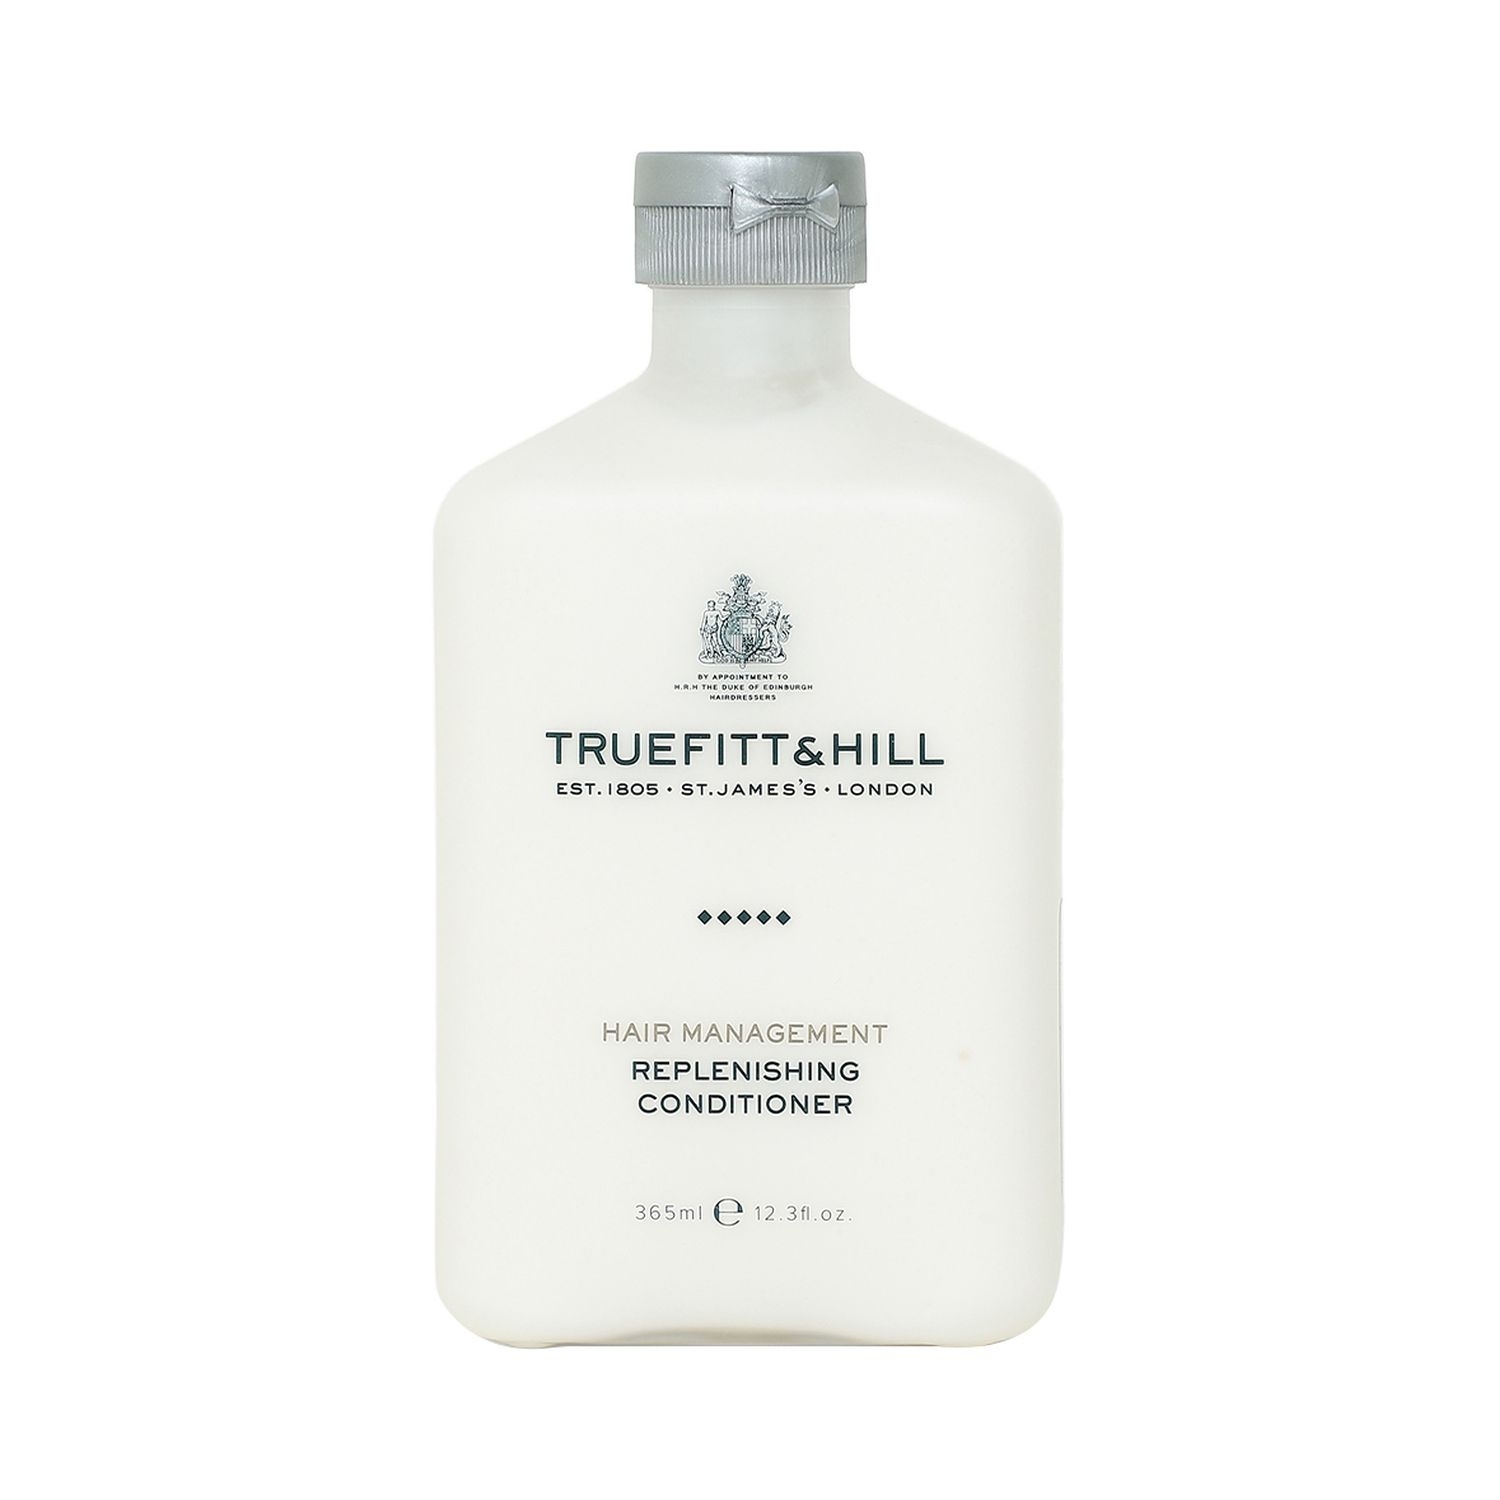 Truefitt & Hill Hair Management Replenishing Conditioner (365ml)